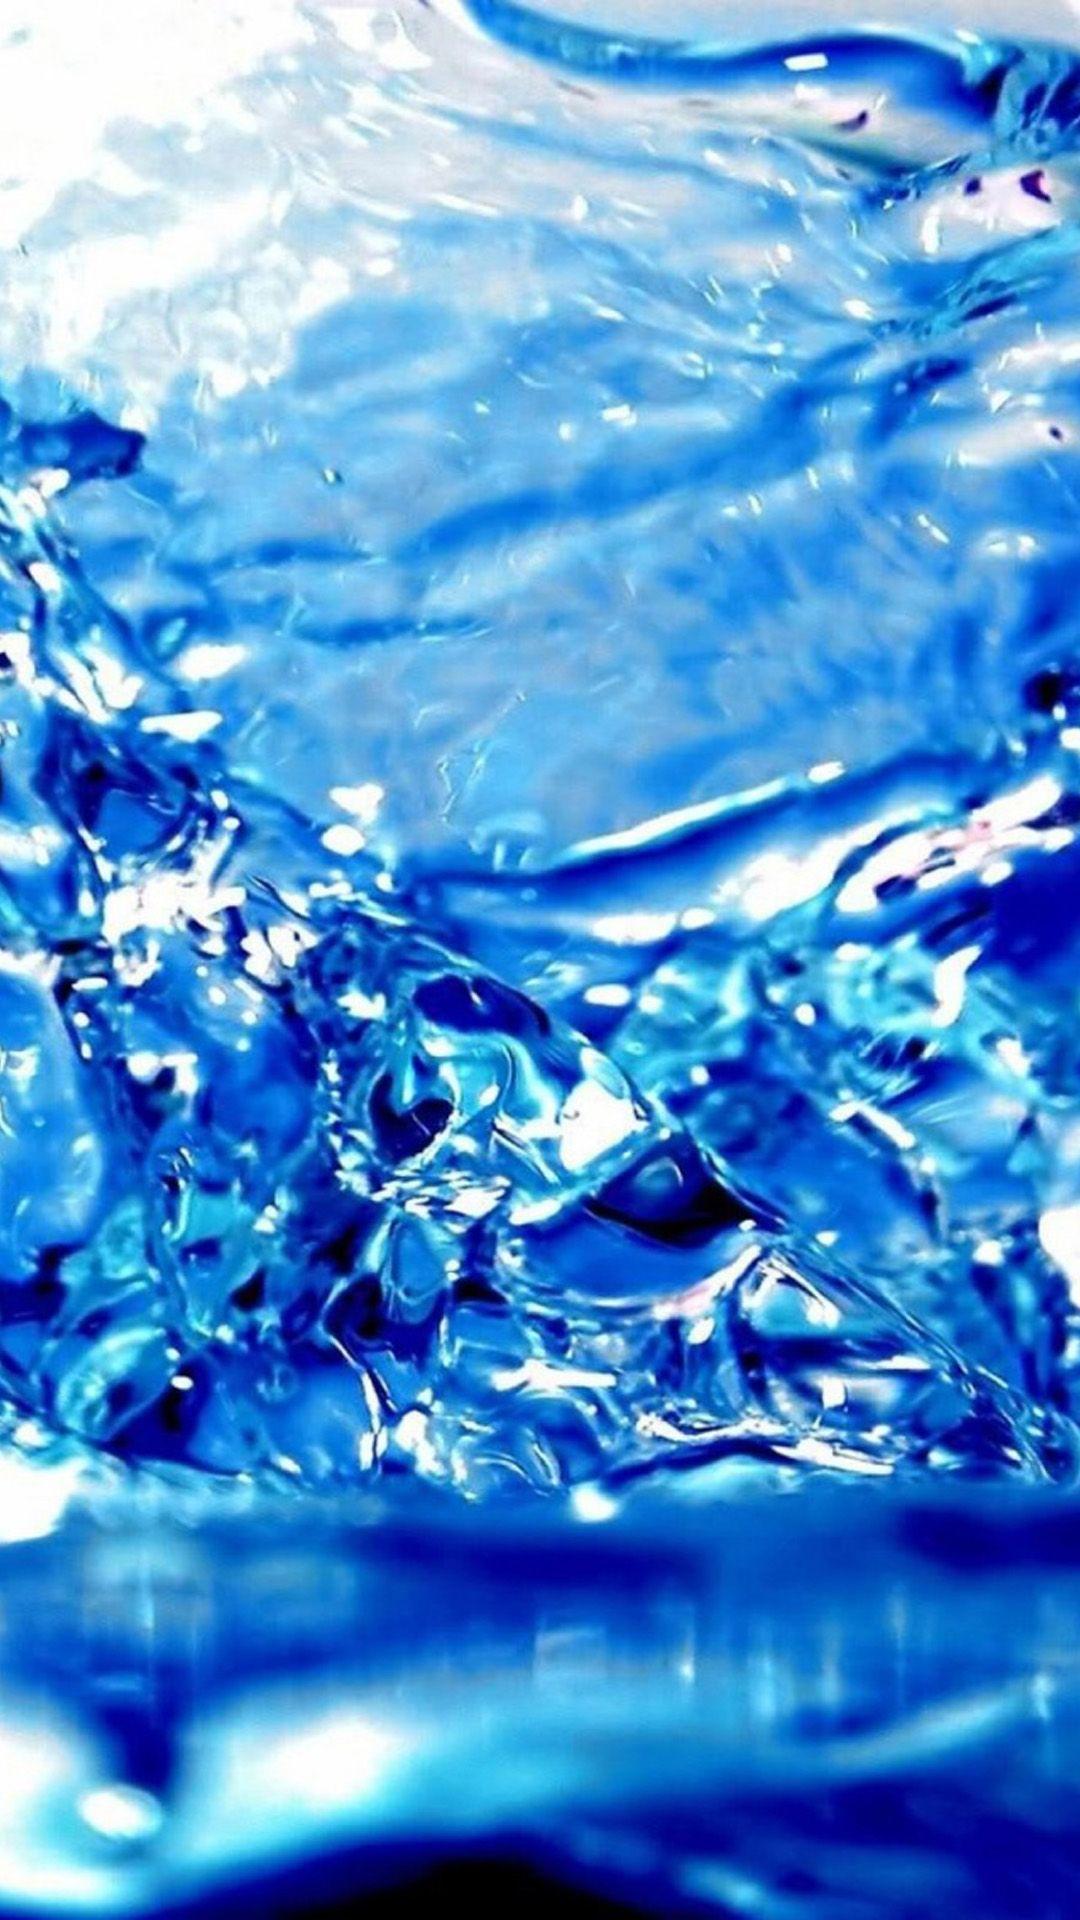 Blue Water Splash Background iPhone 6 wallpaper. iPhone 6